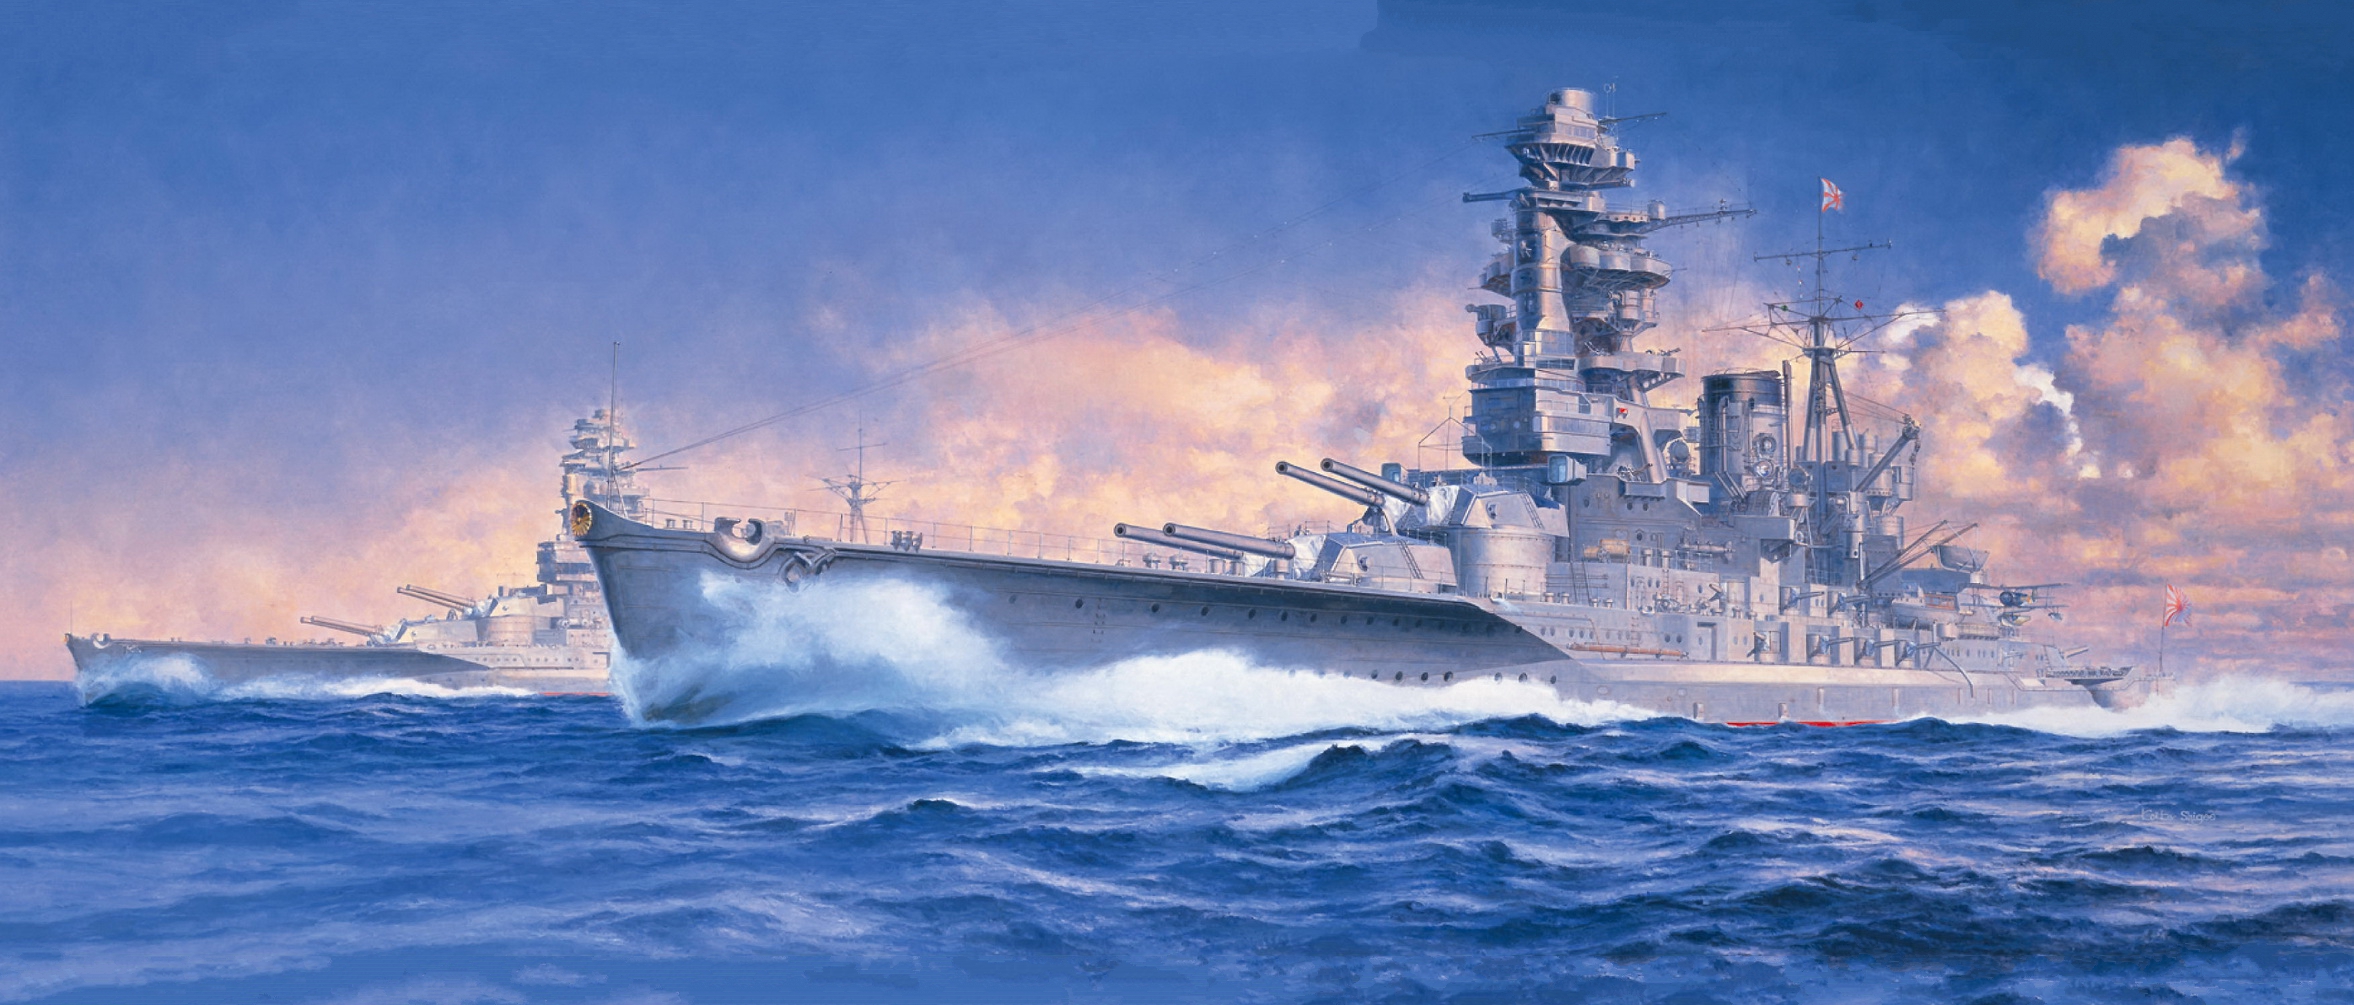 рисунок IJN Battleship Nagato 1941